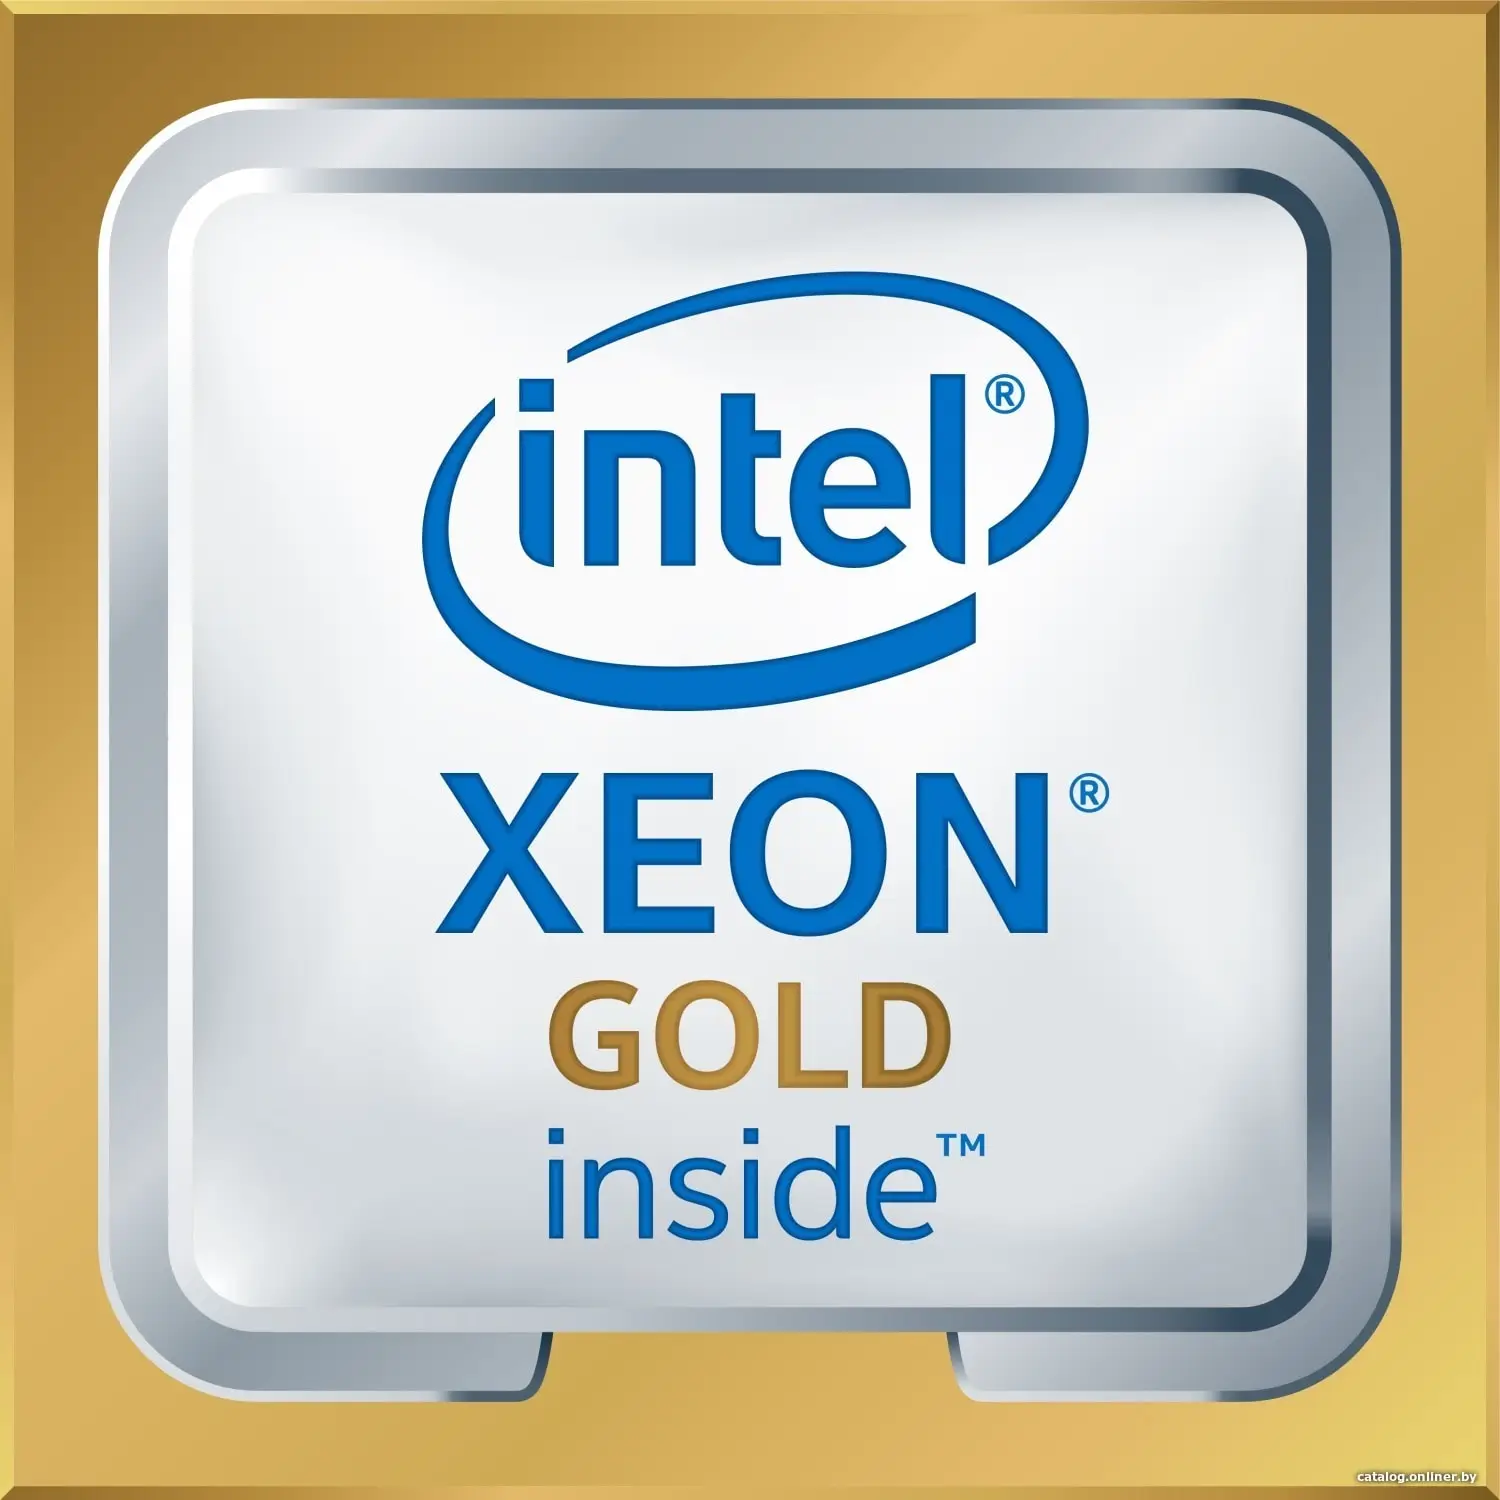 Купить Intel Xeon® Gold 6230R 26 Cores, 52 Threads, 2.1/4.0GHz, 35.75M, DDR4-2933, 2S, 150W OEM, цена, опт и розница